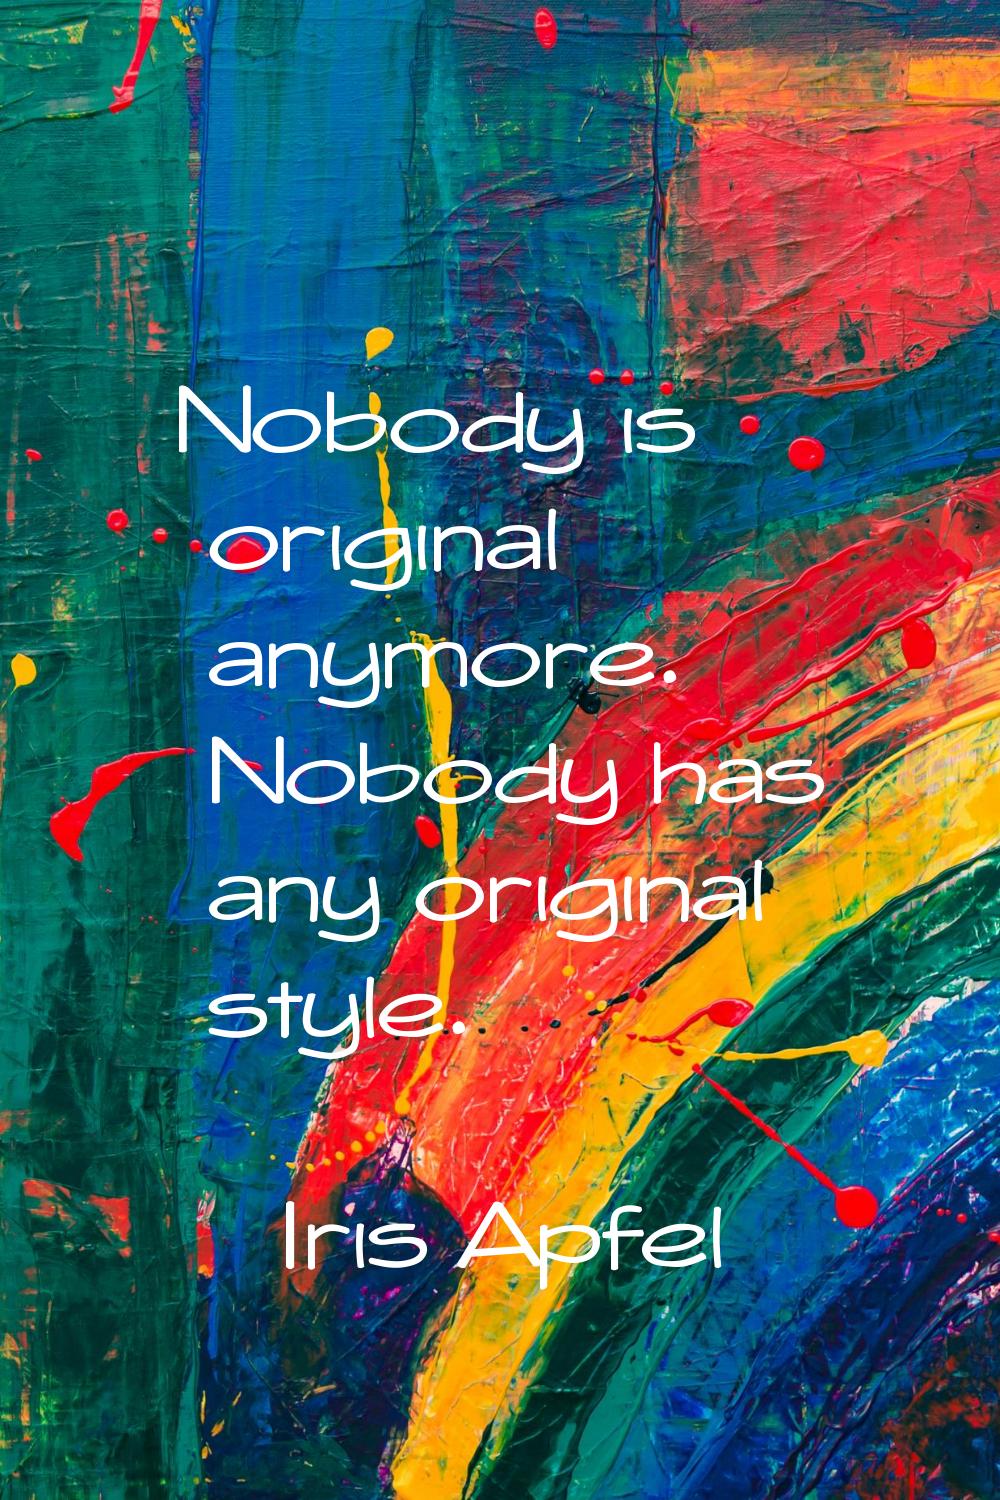 Nobody is original anymore. Nobody has any original style.